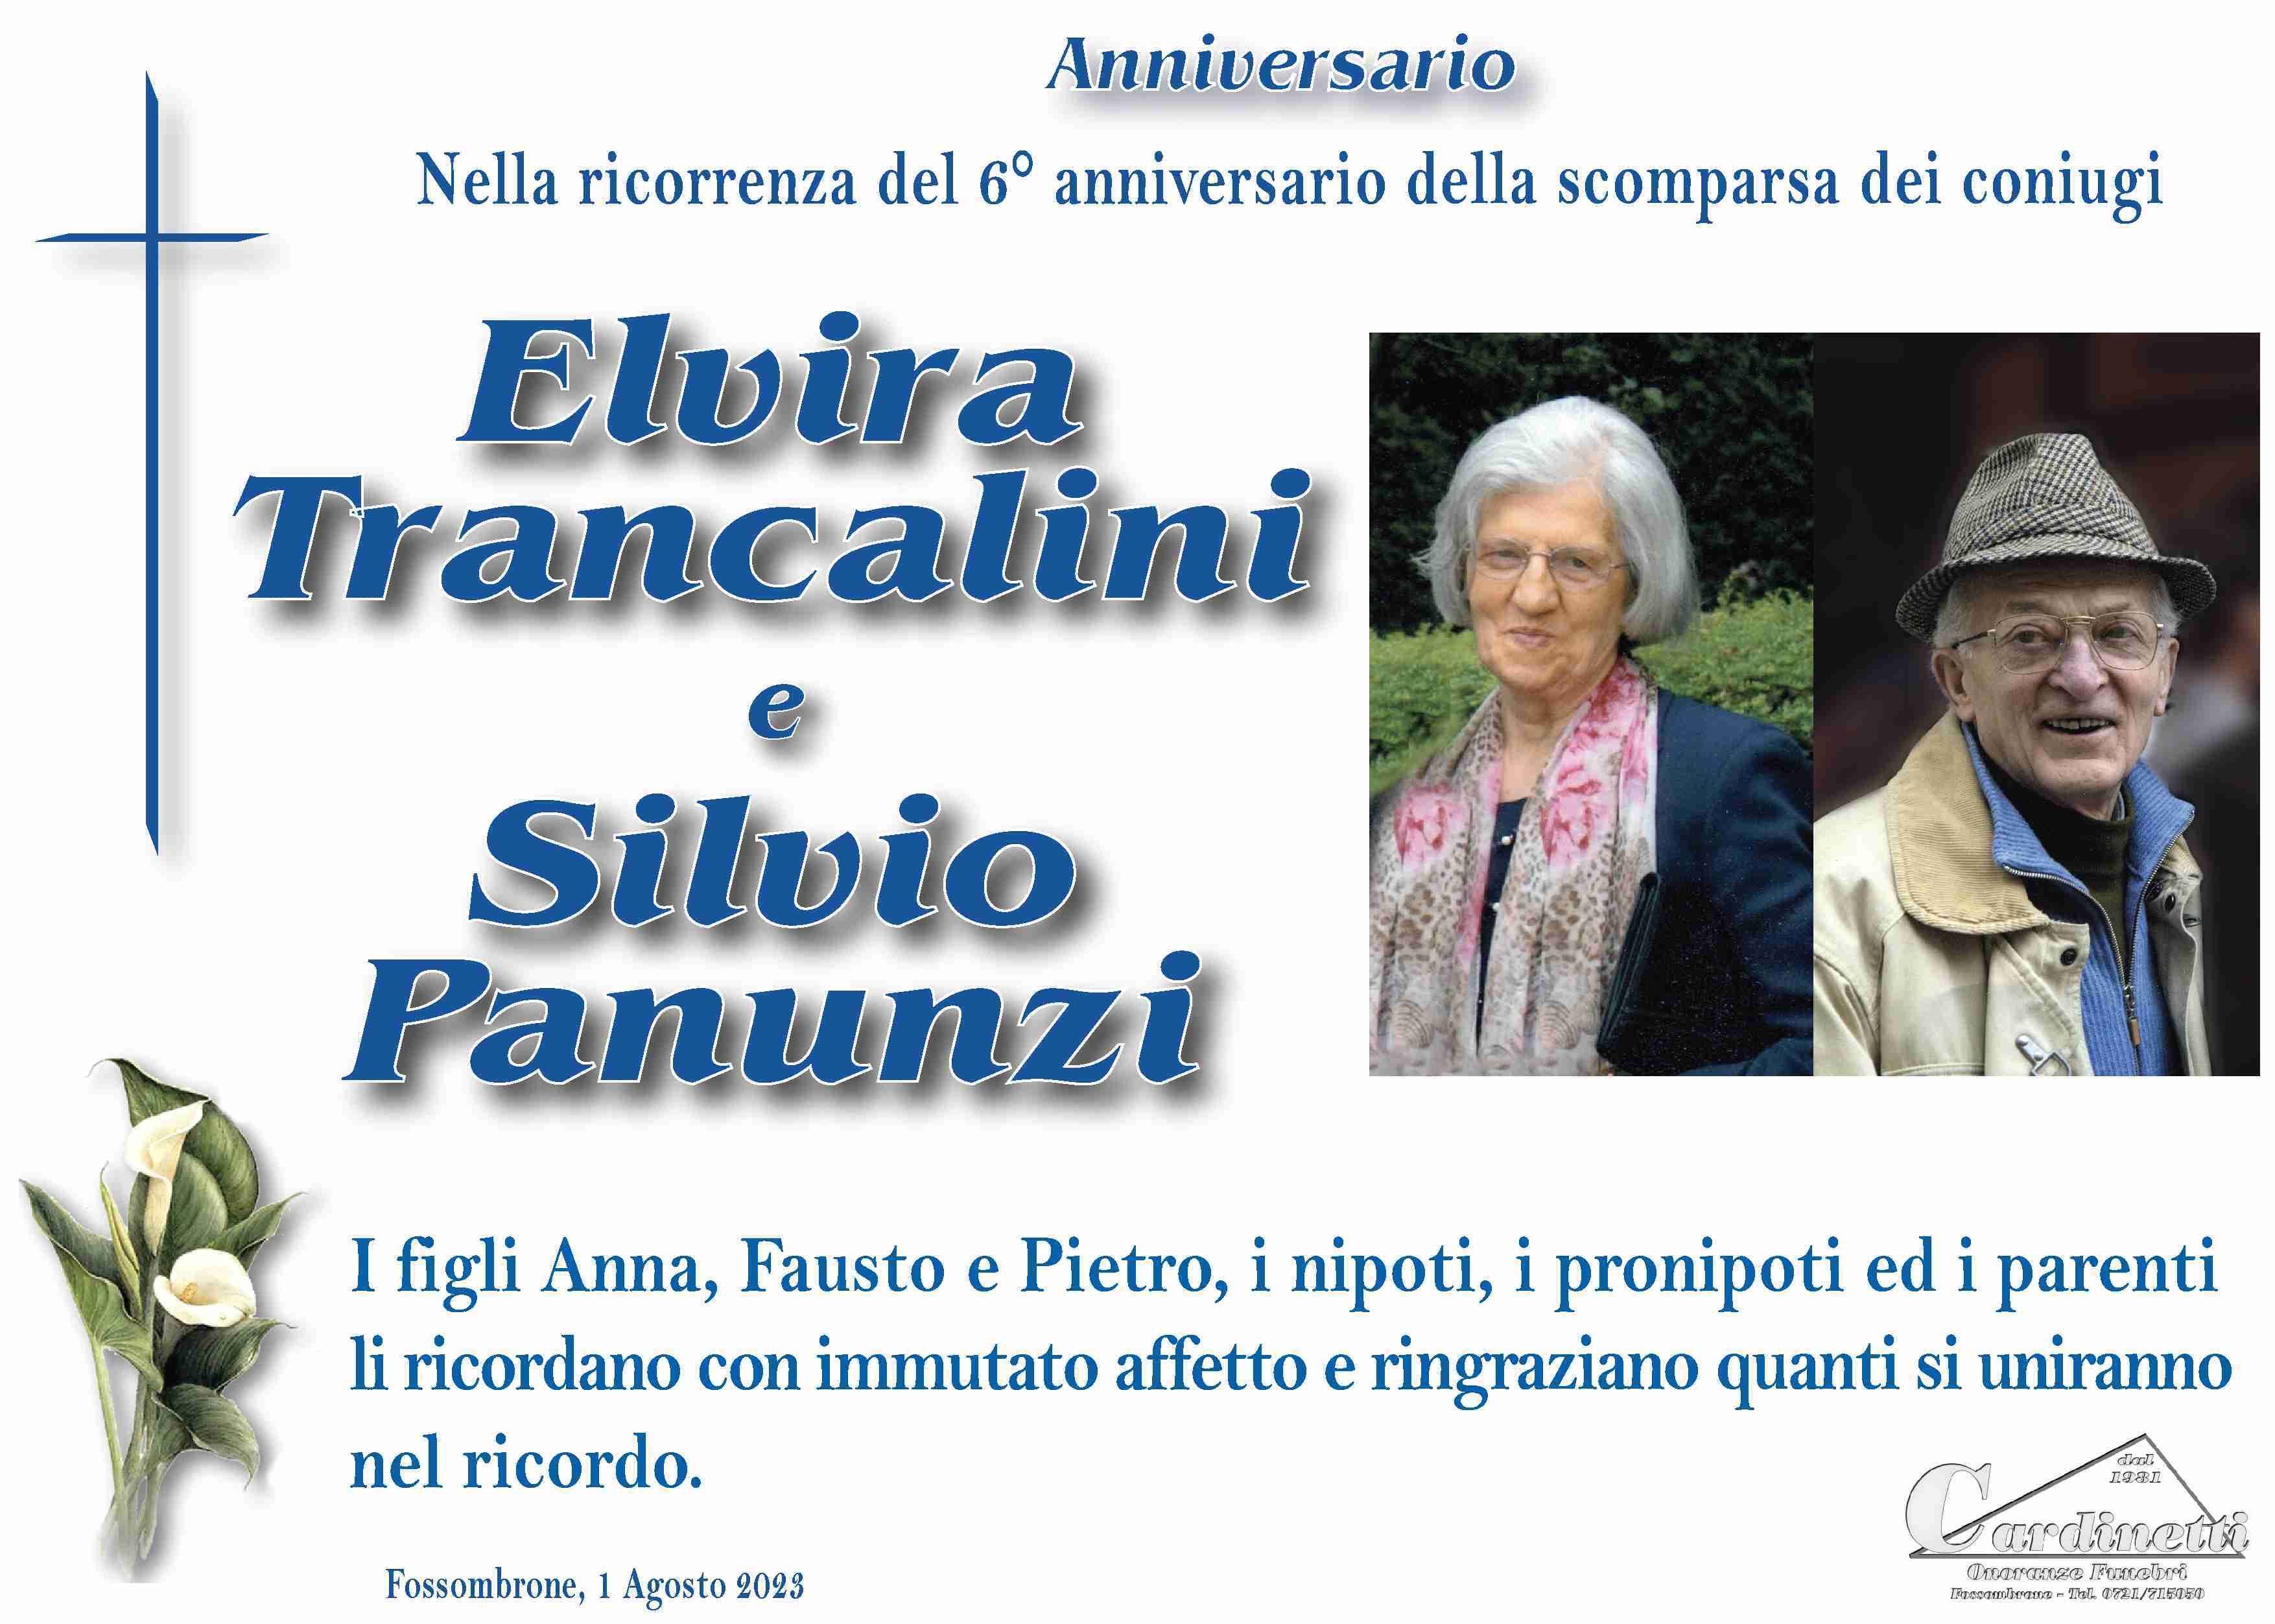 Elvira Trancalini e Silvio Panunzi